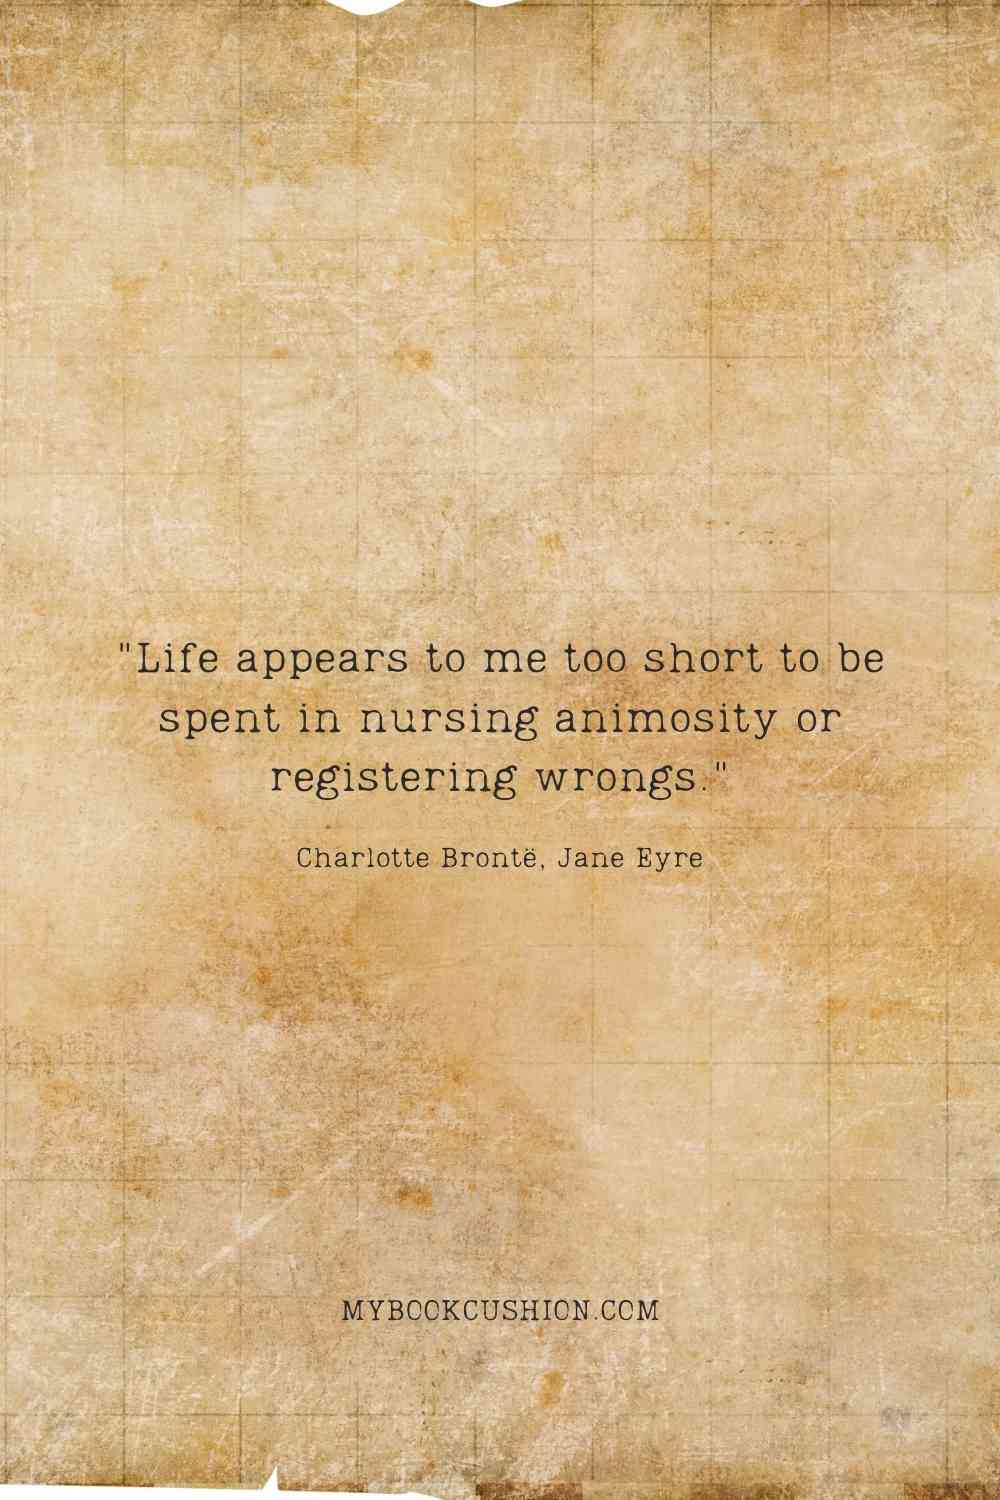 "Life appears to me too short to be spent in nursing animosity or registering wrongs." - Charlotte Brontë, Jane Eyre